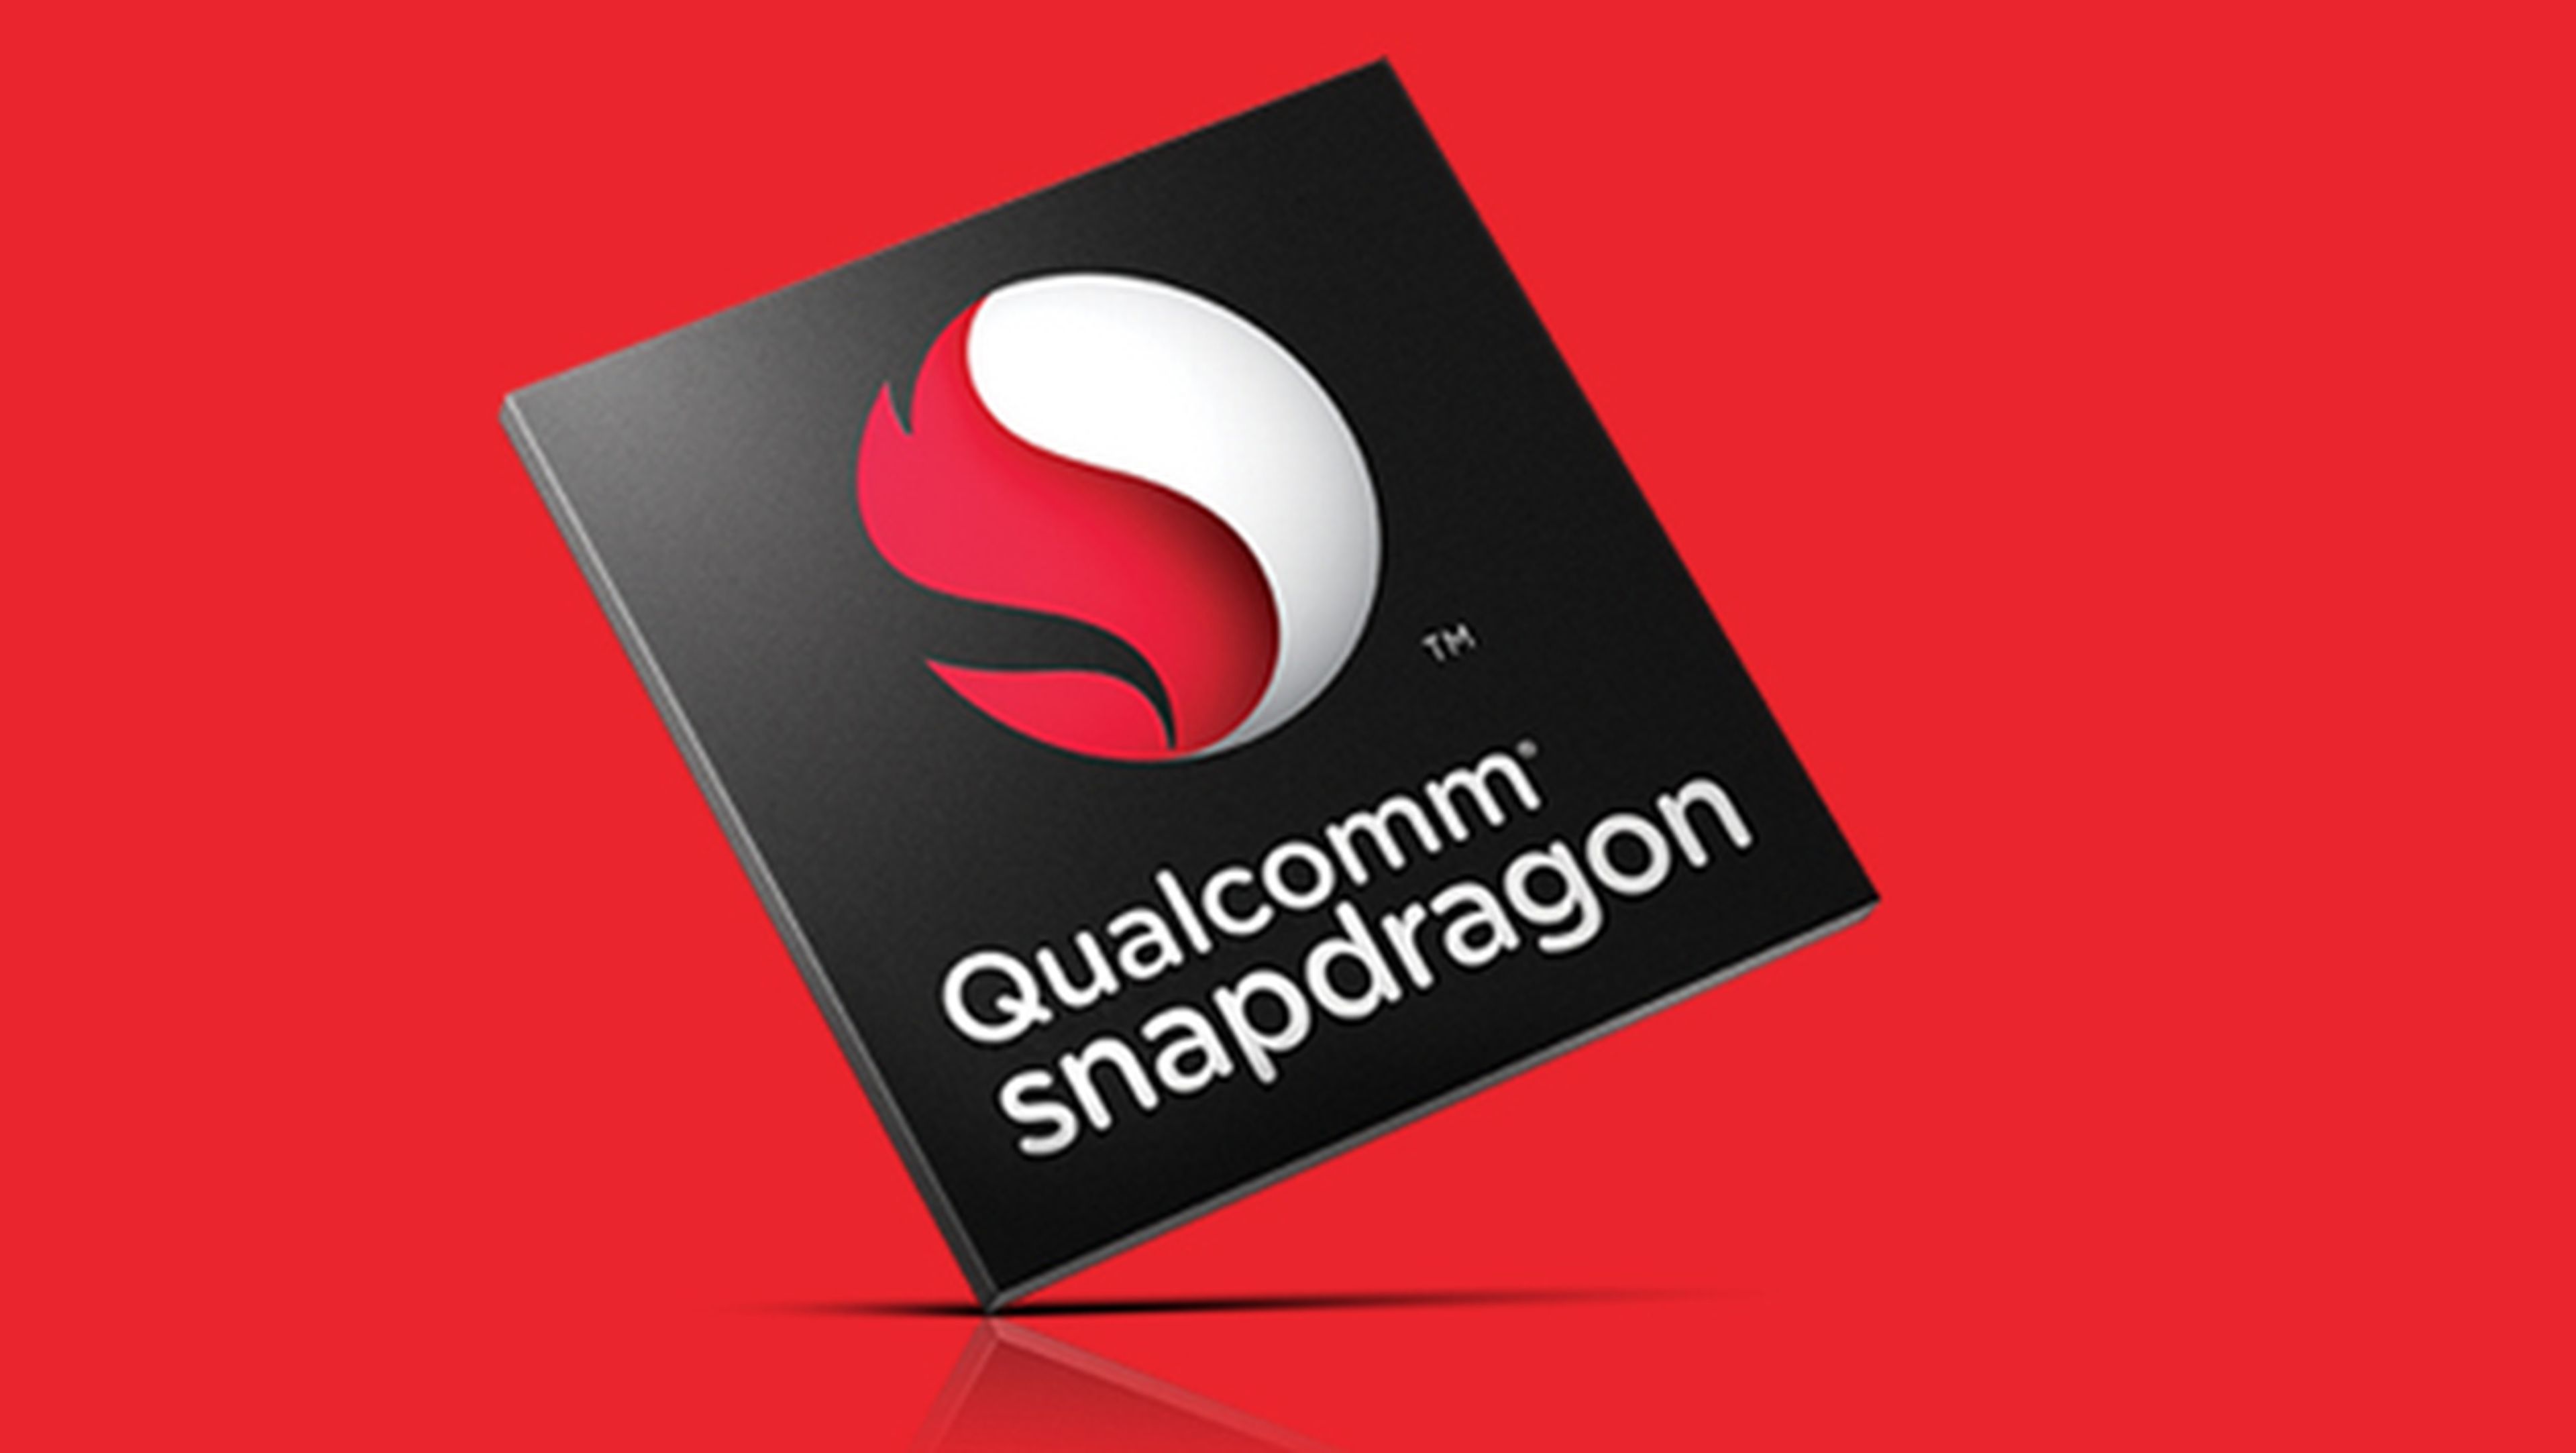 Qualcomm Snapdragon 617 430 nuevos chips gama media